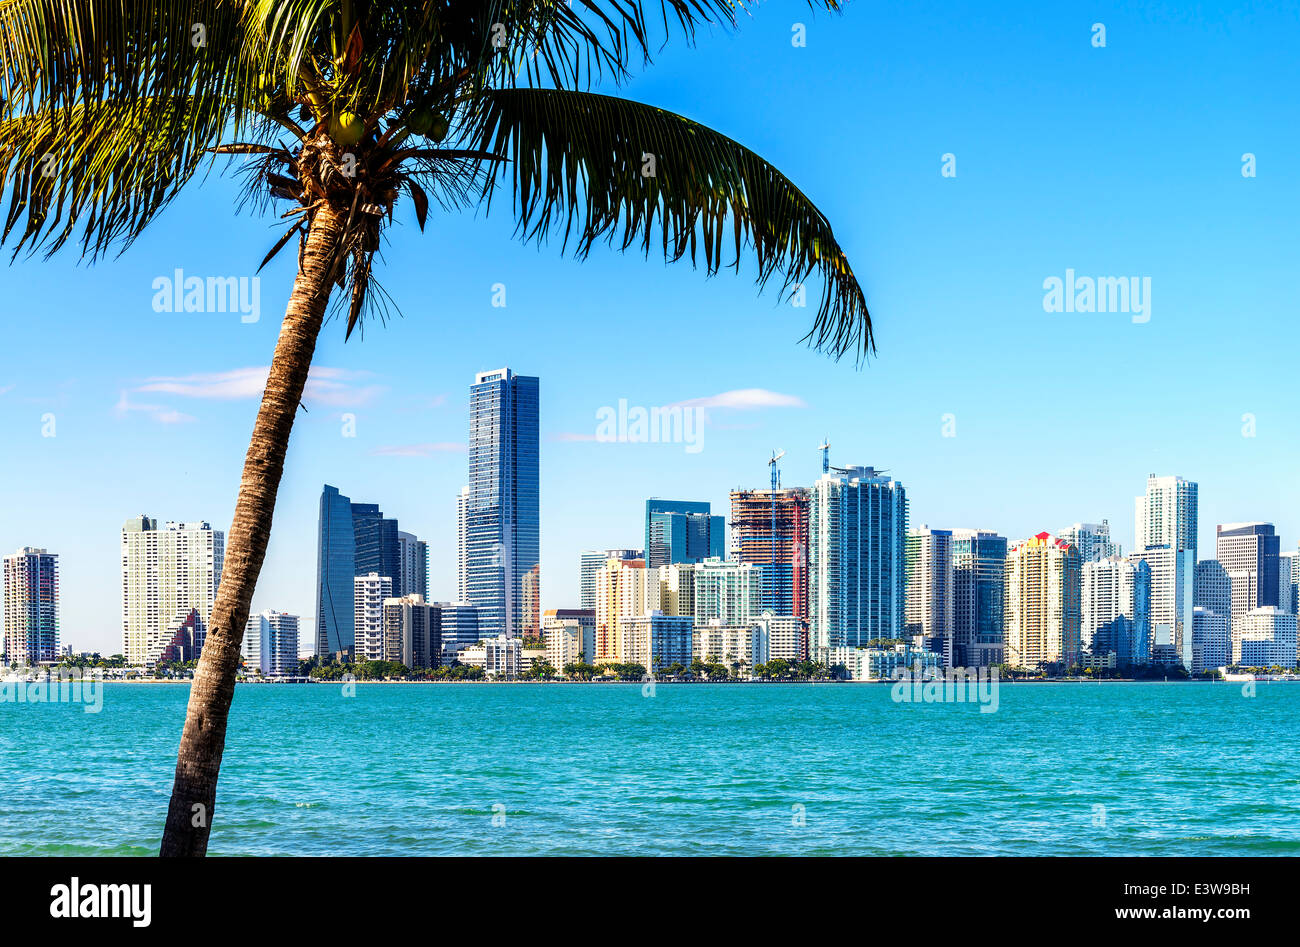 Miami Downtown skyline in daytime with Biscayne Bay. Stock Photo